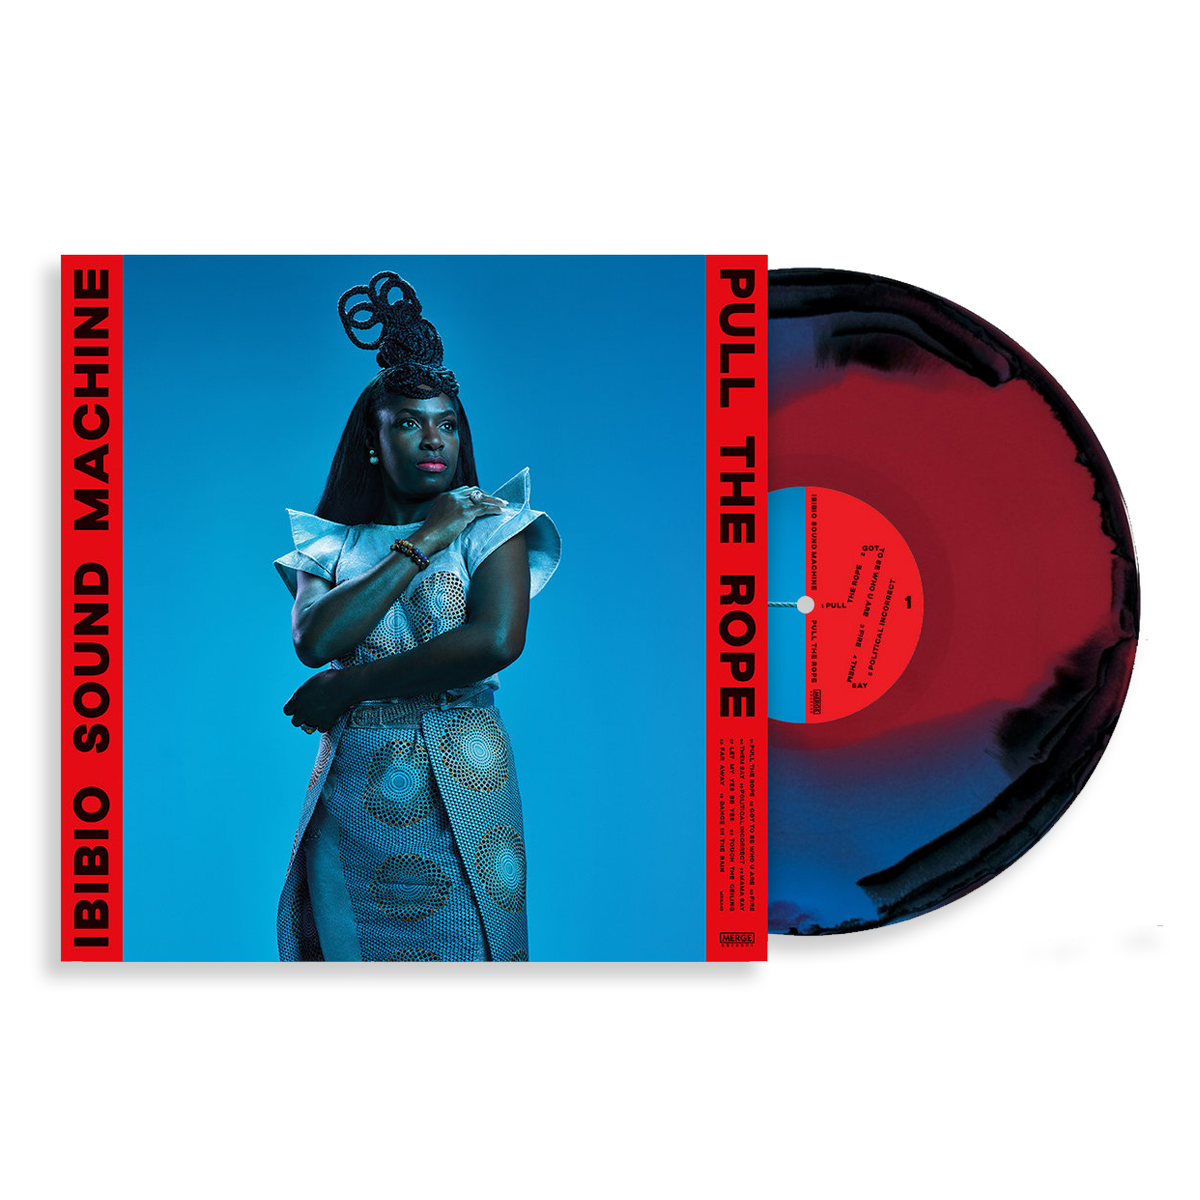 Ibibio Sound Machine - Pull The Rope: Limited Black, Blue & Red Vinyl LP